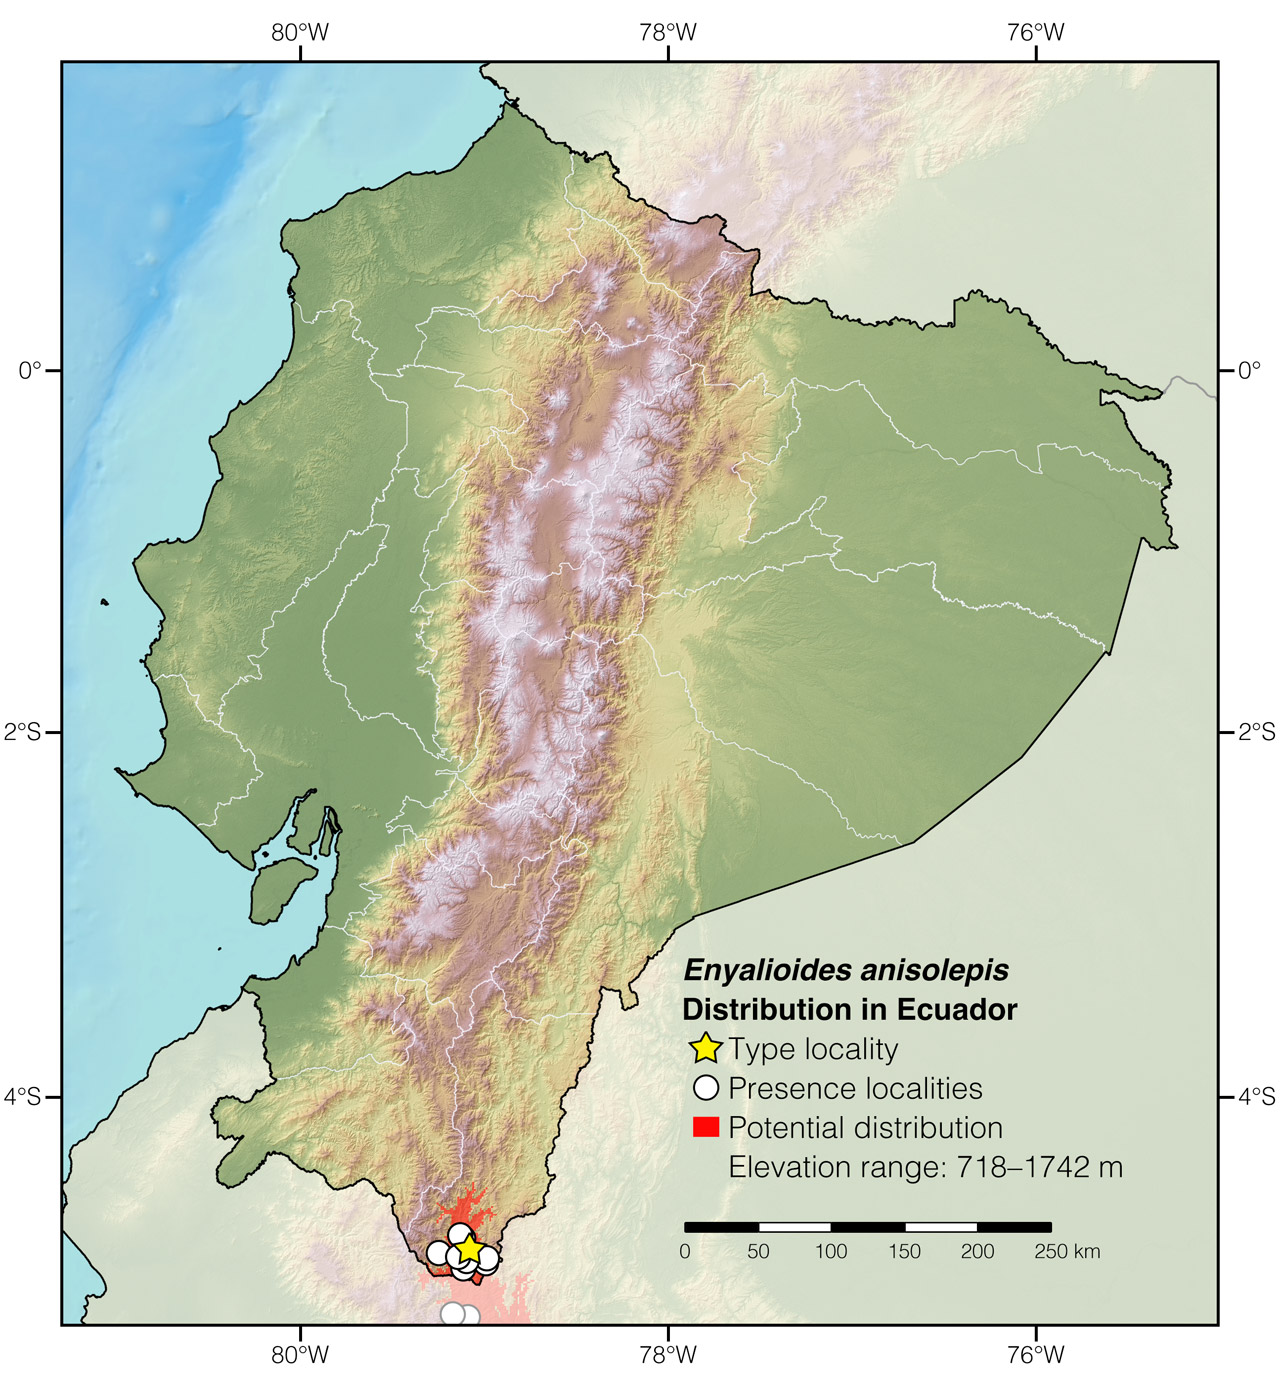 Distribution of Enyalioides anisolepis in Ecuador